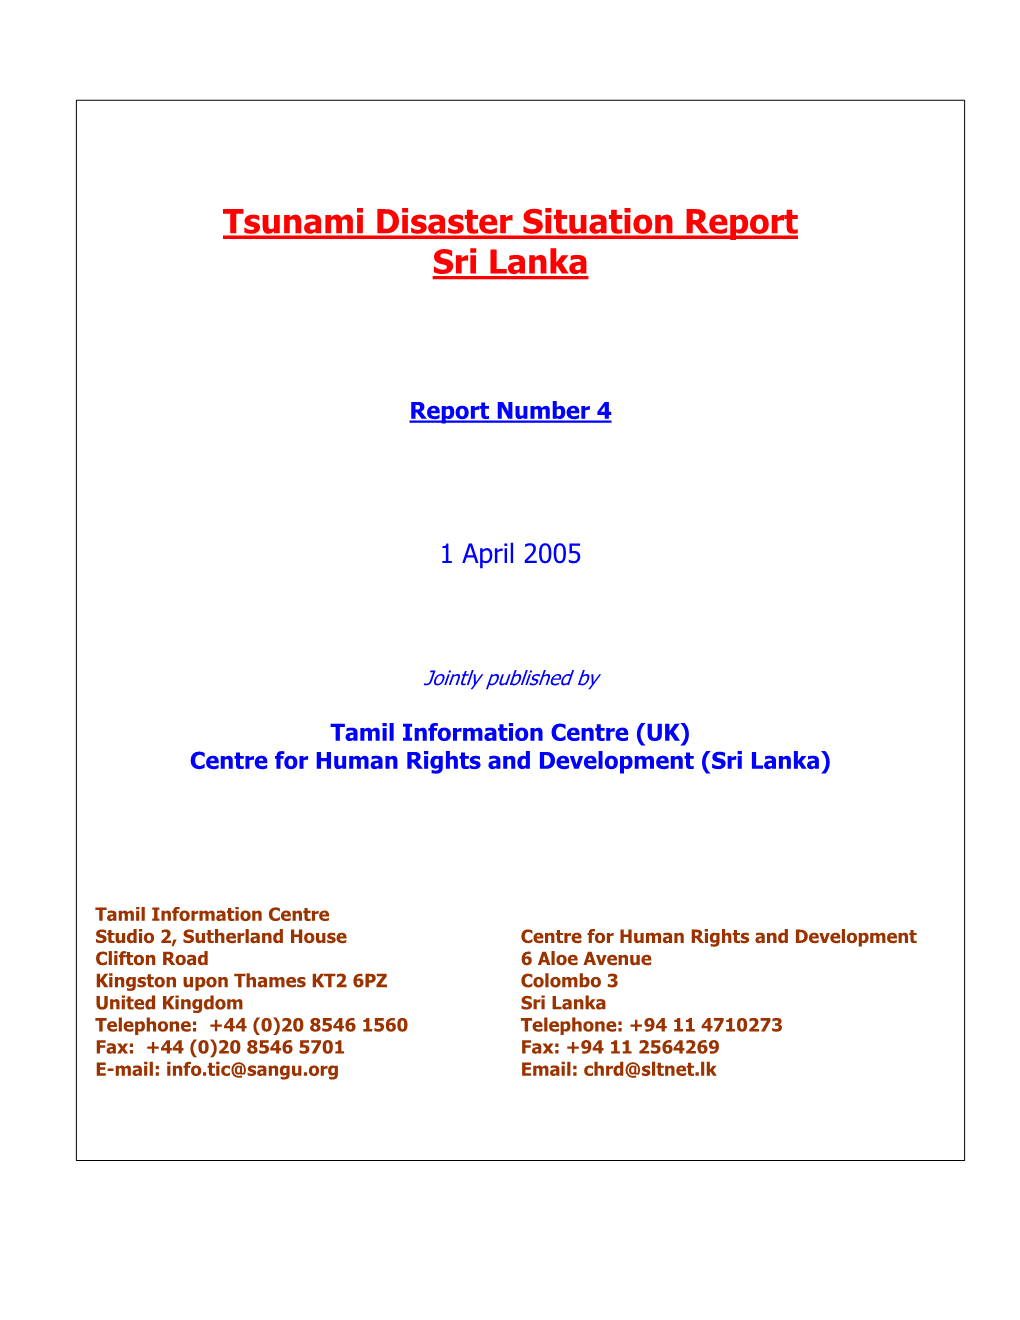 Tsunami Disaster Situation Report Sri Lanka Report Number 4